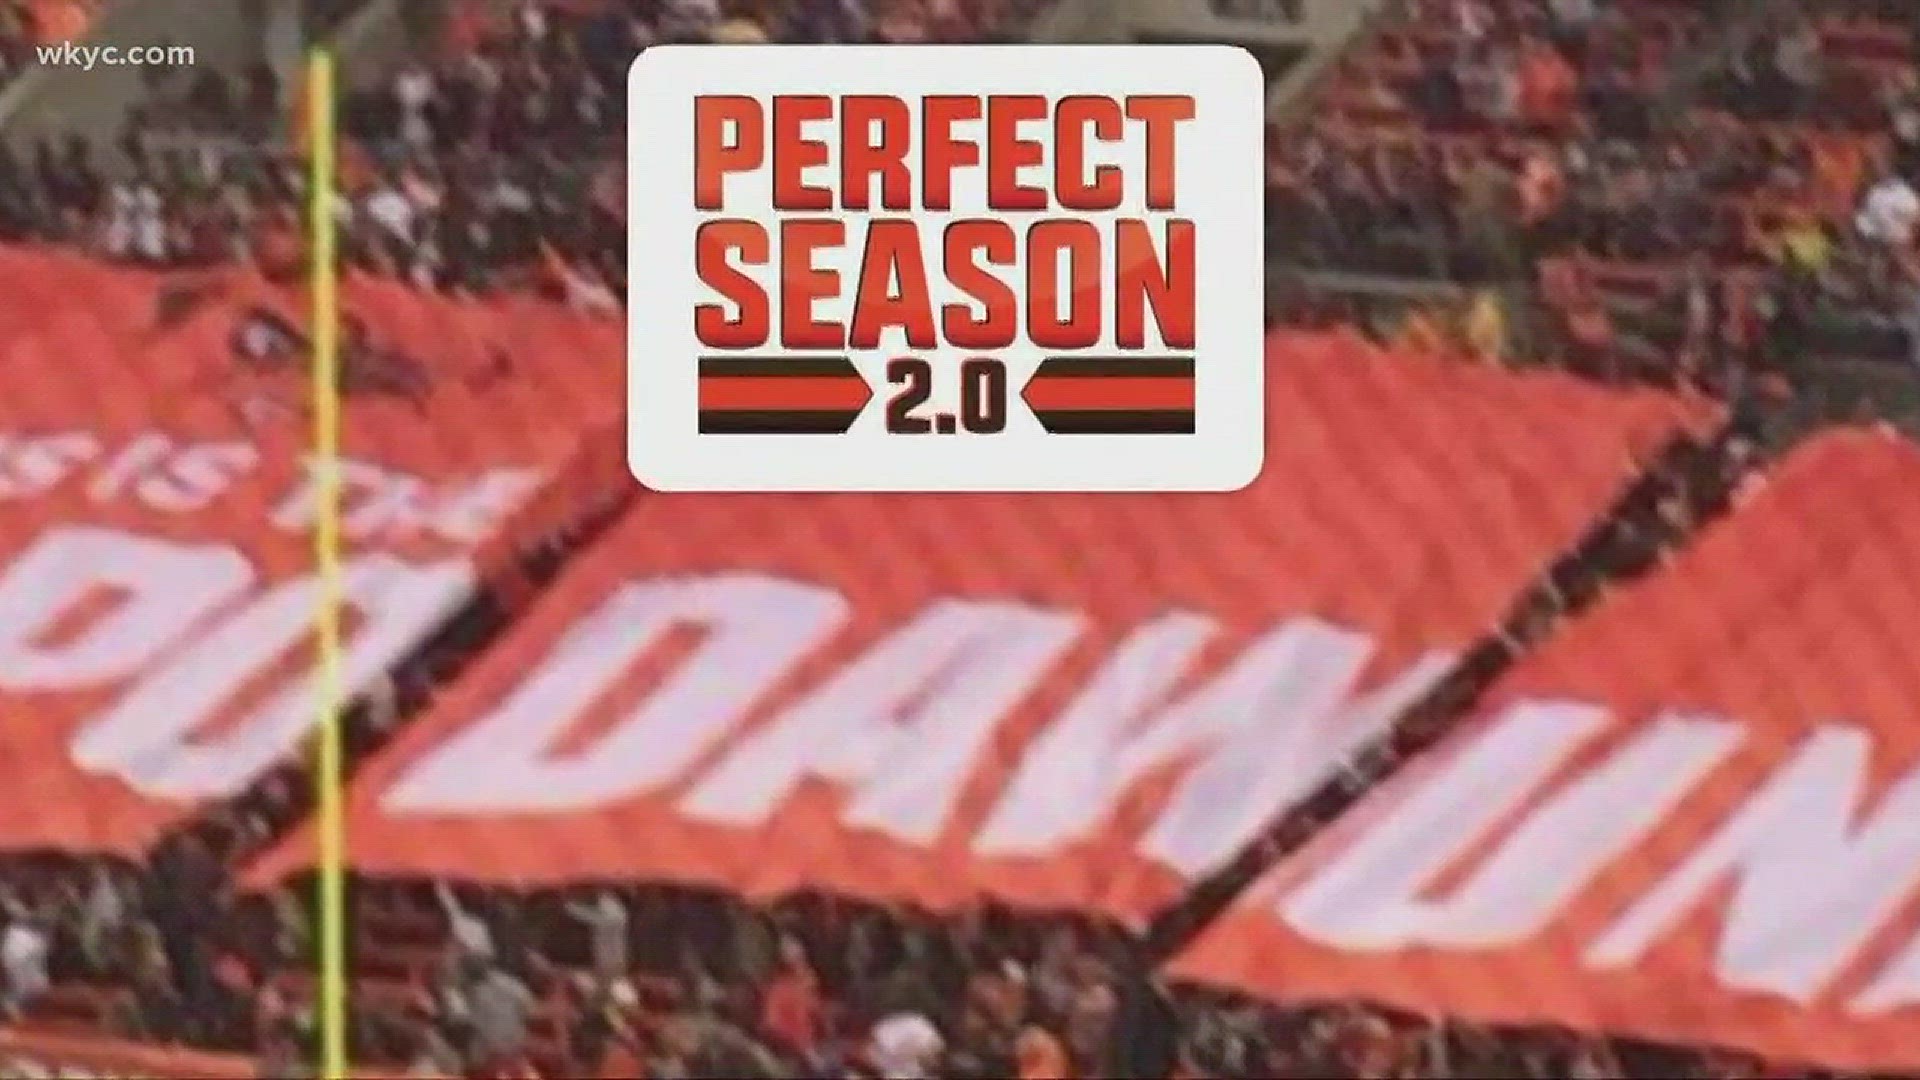 Perfect Season Parade 2.0 Cleveland Browns